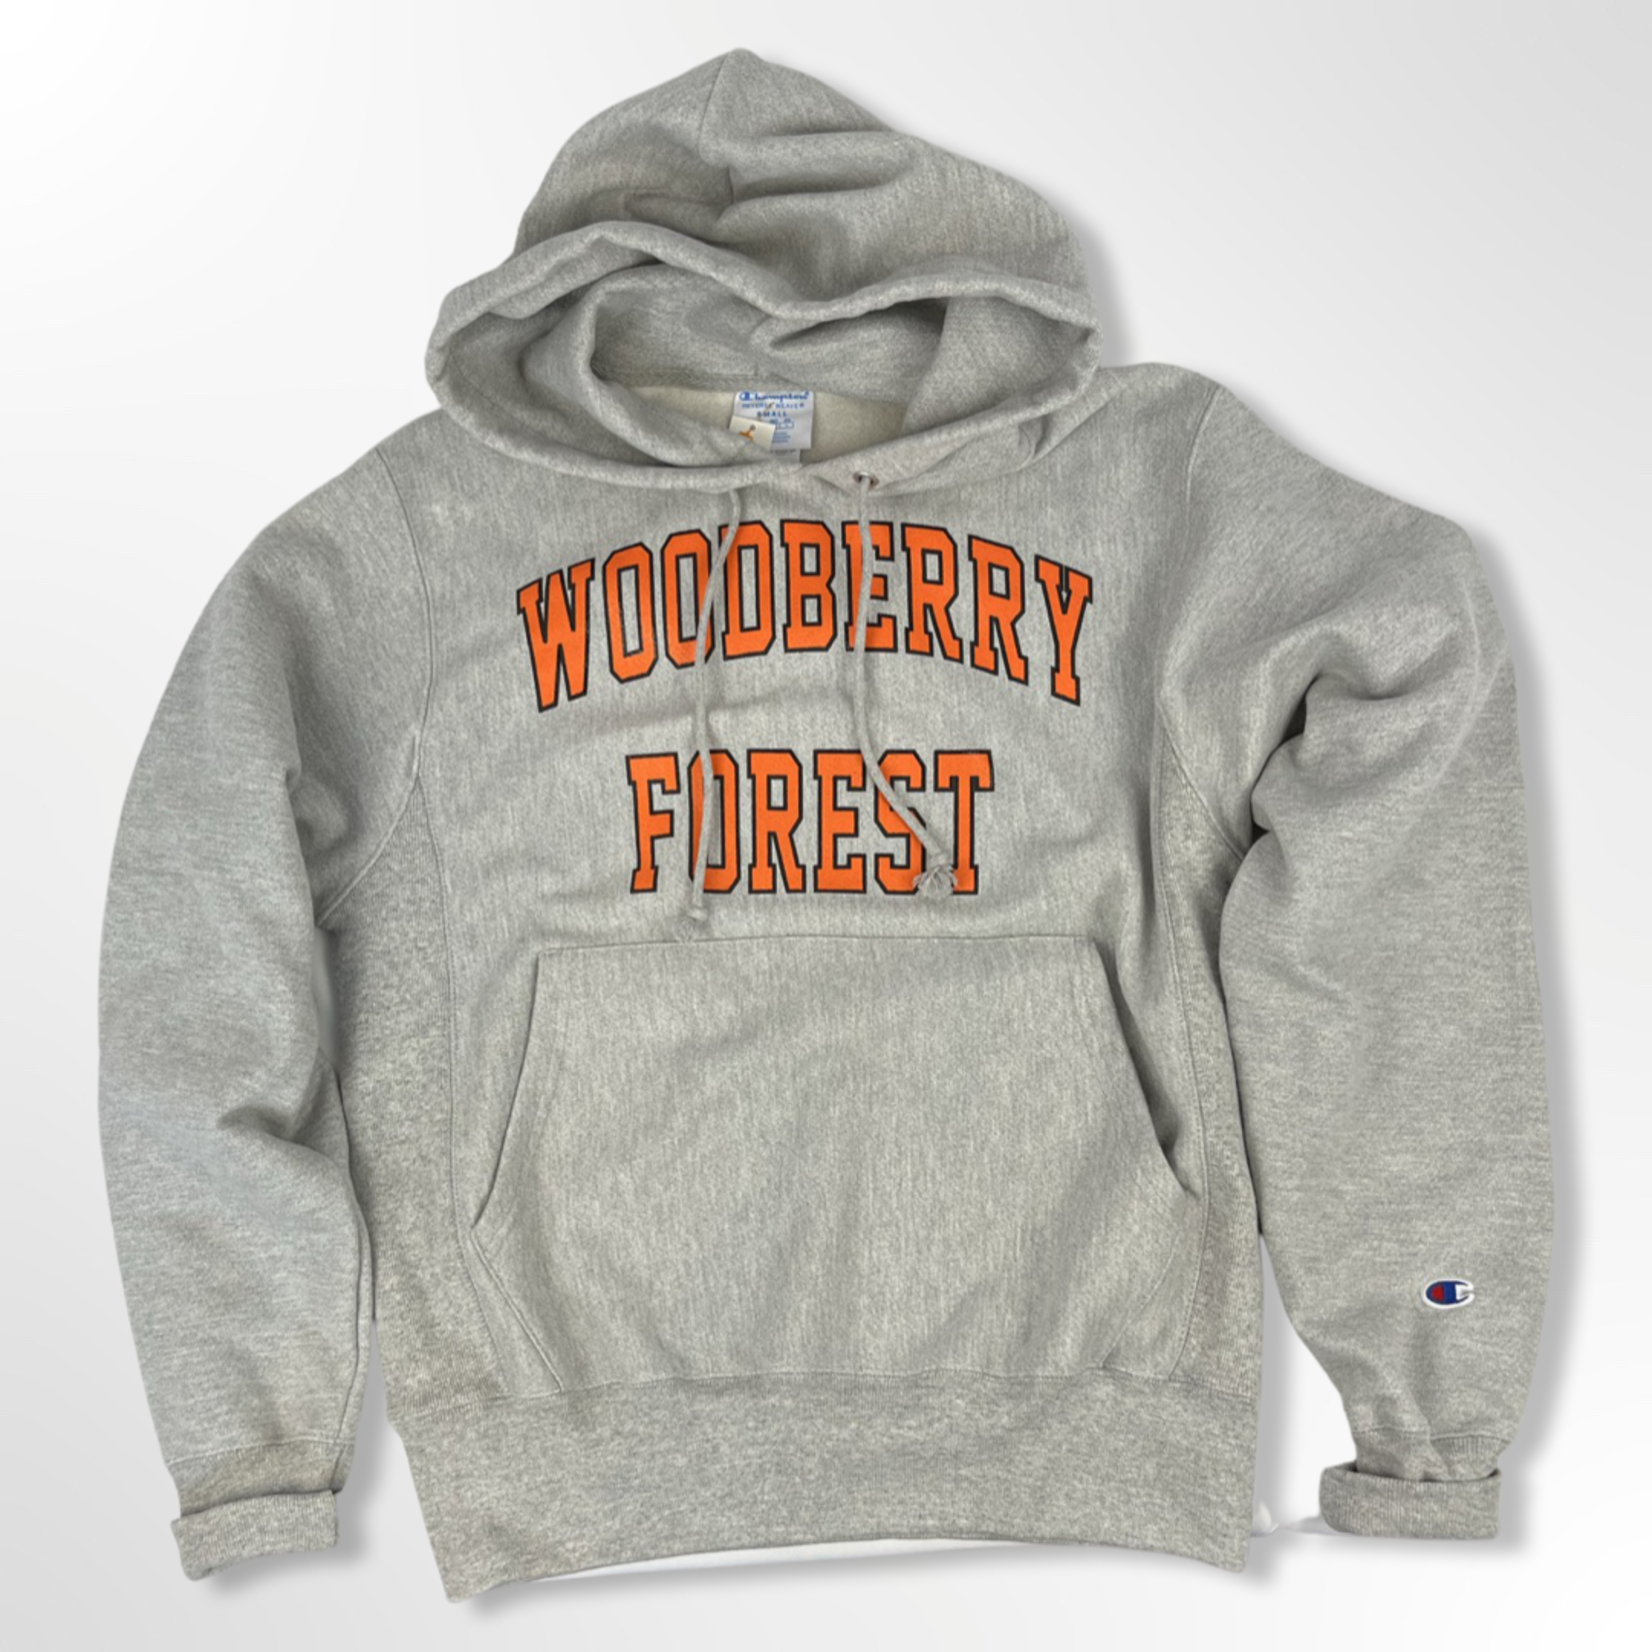 Champion Hooded Sweatshirt - School Store Woodberry